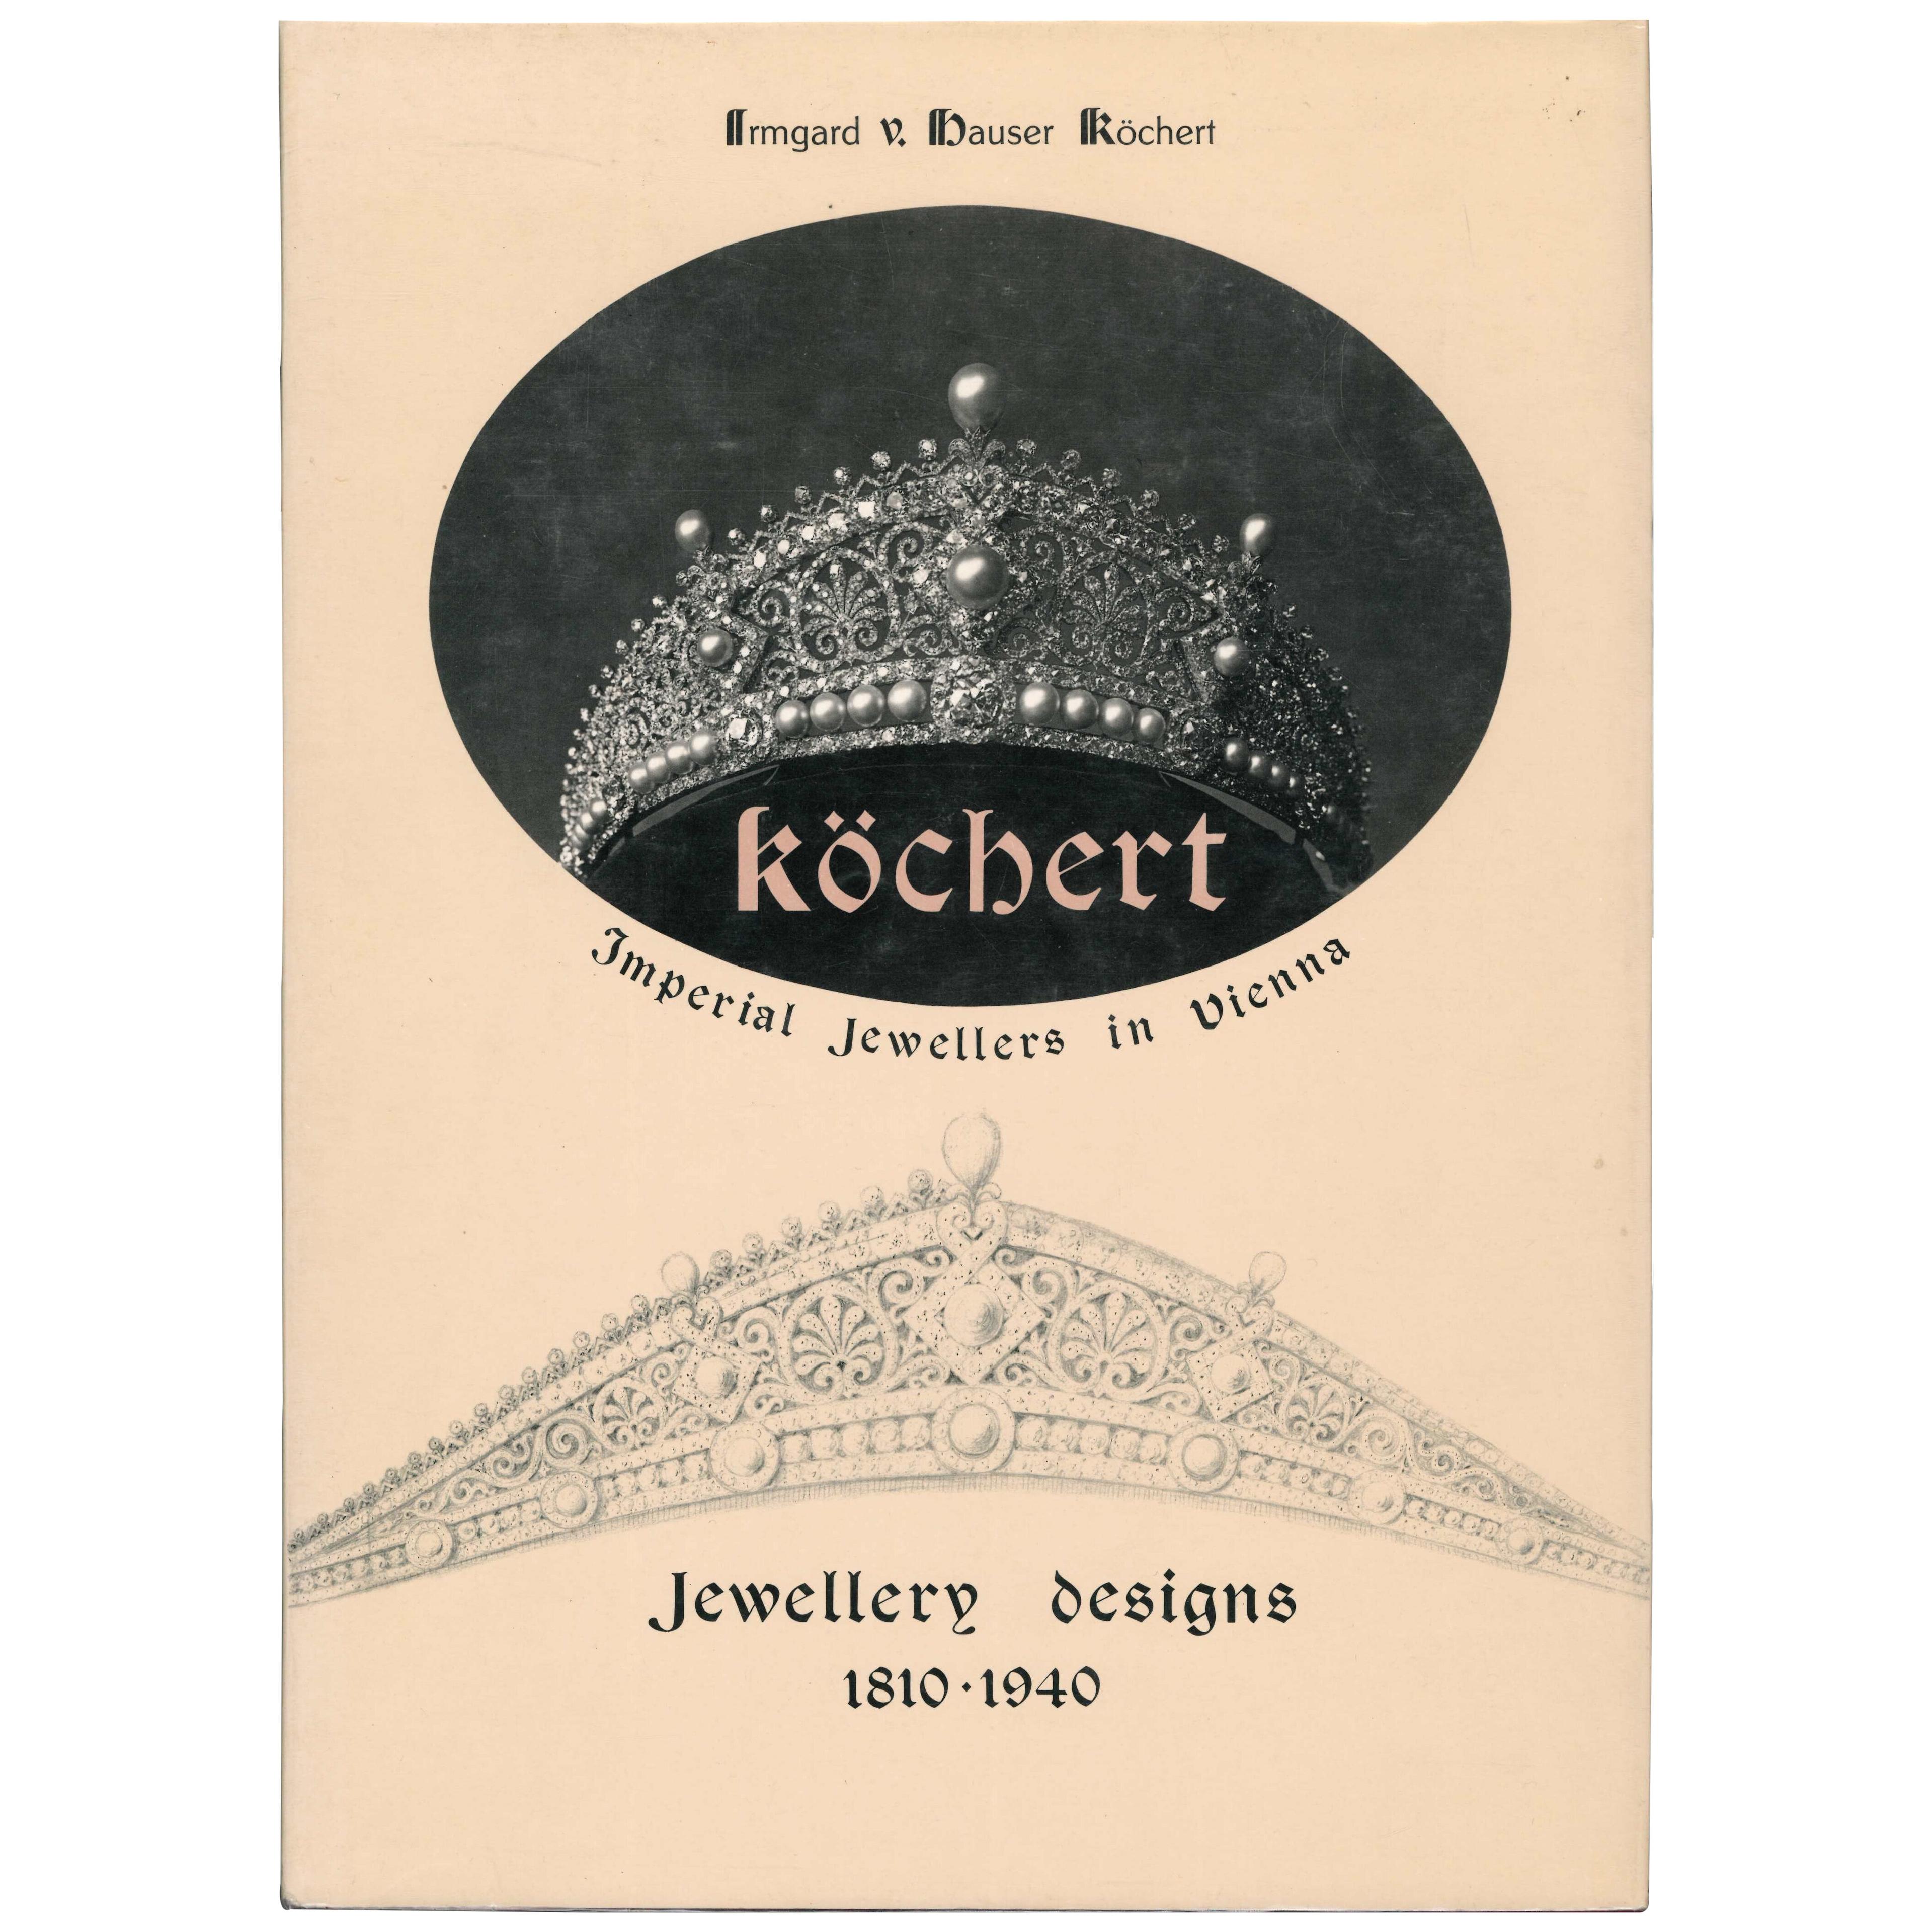 KOCHERT - Imperial Jewellers in Vienna. Jewellery. Designs 1810-1940. Book